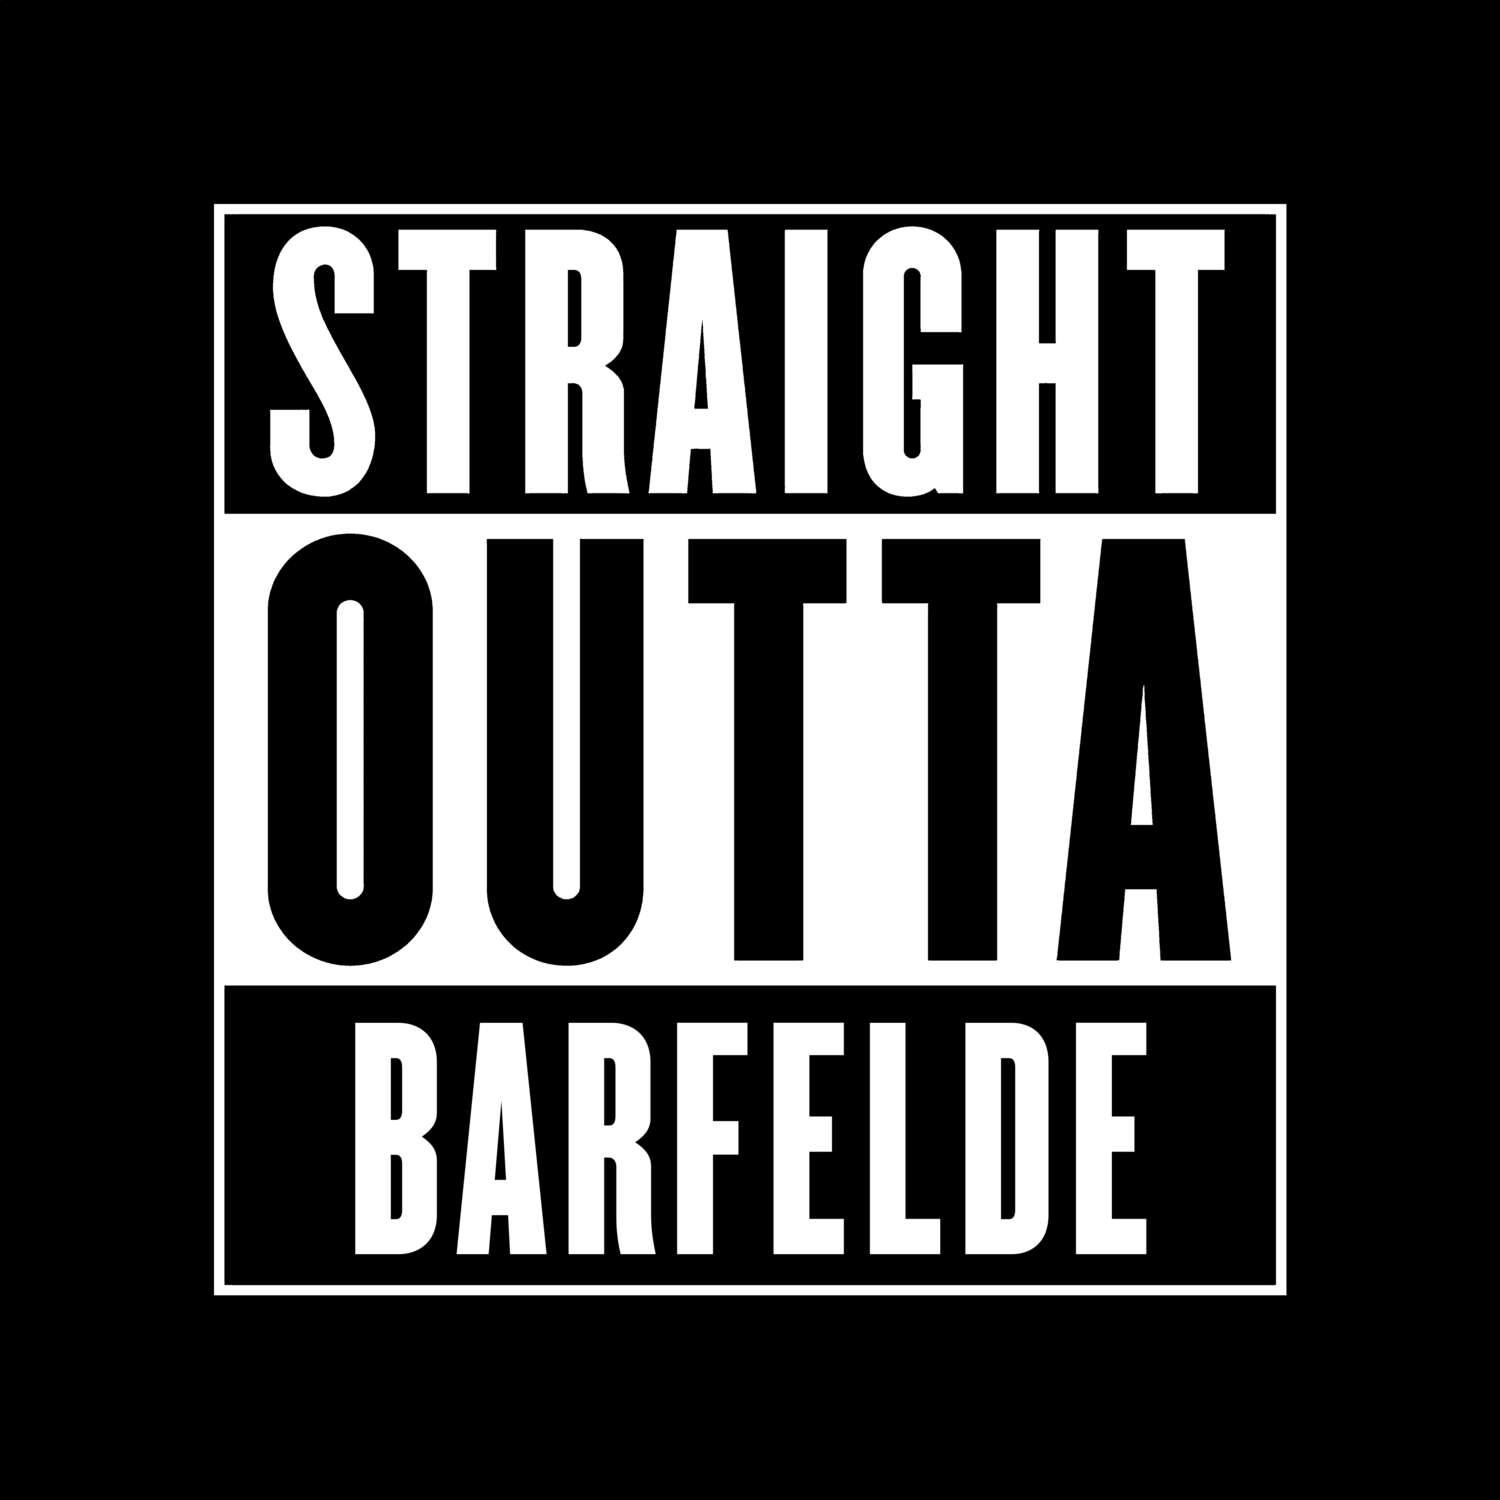 Barfelde T-Shirt »Straight Outta«